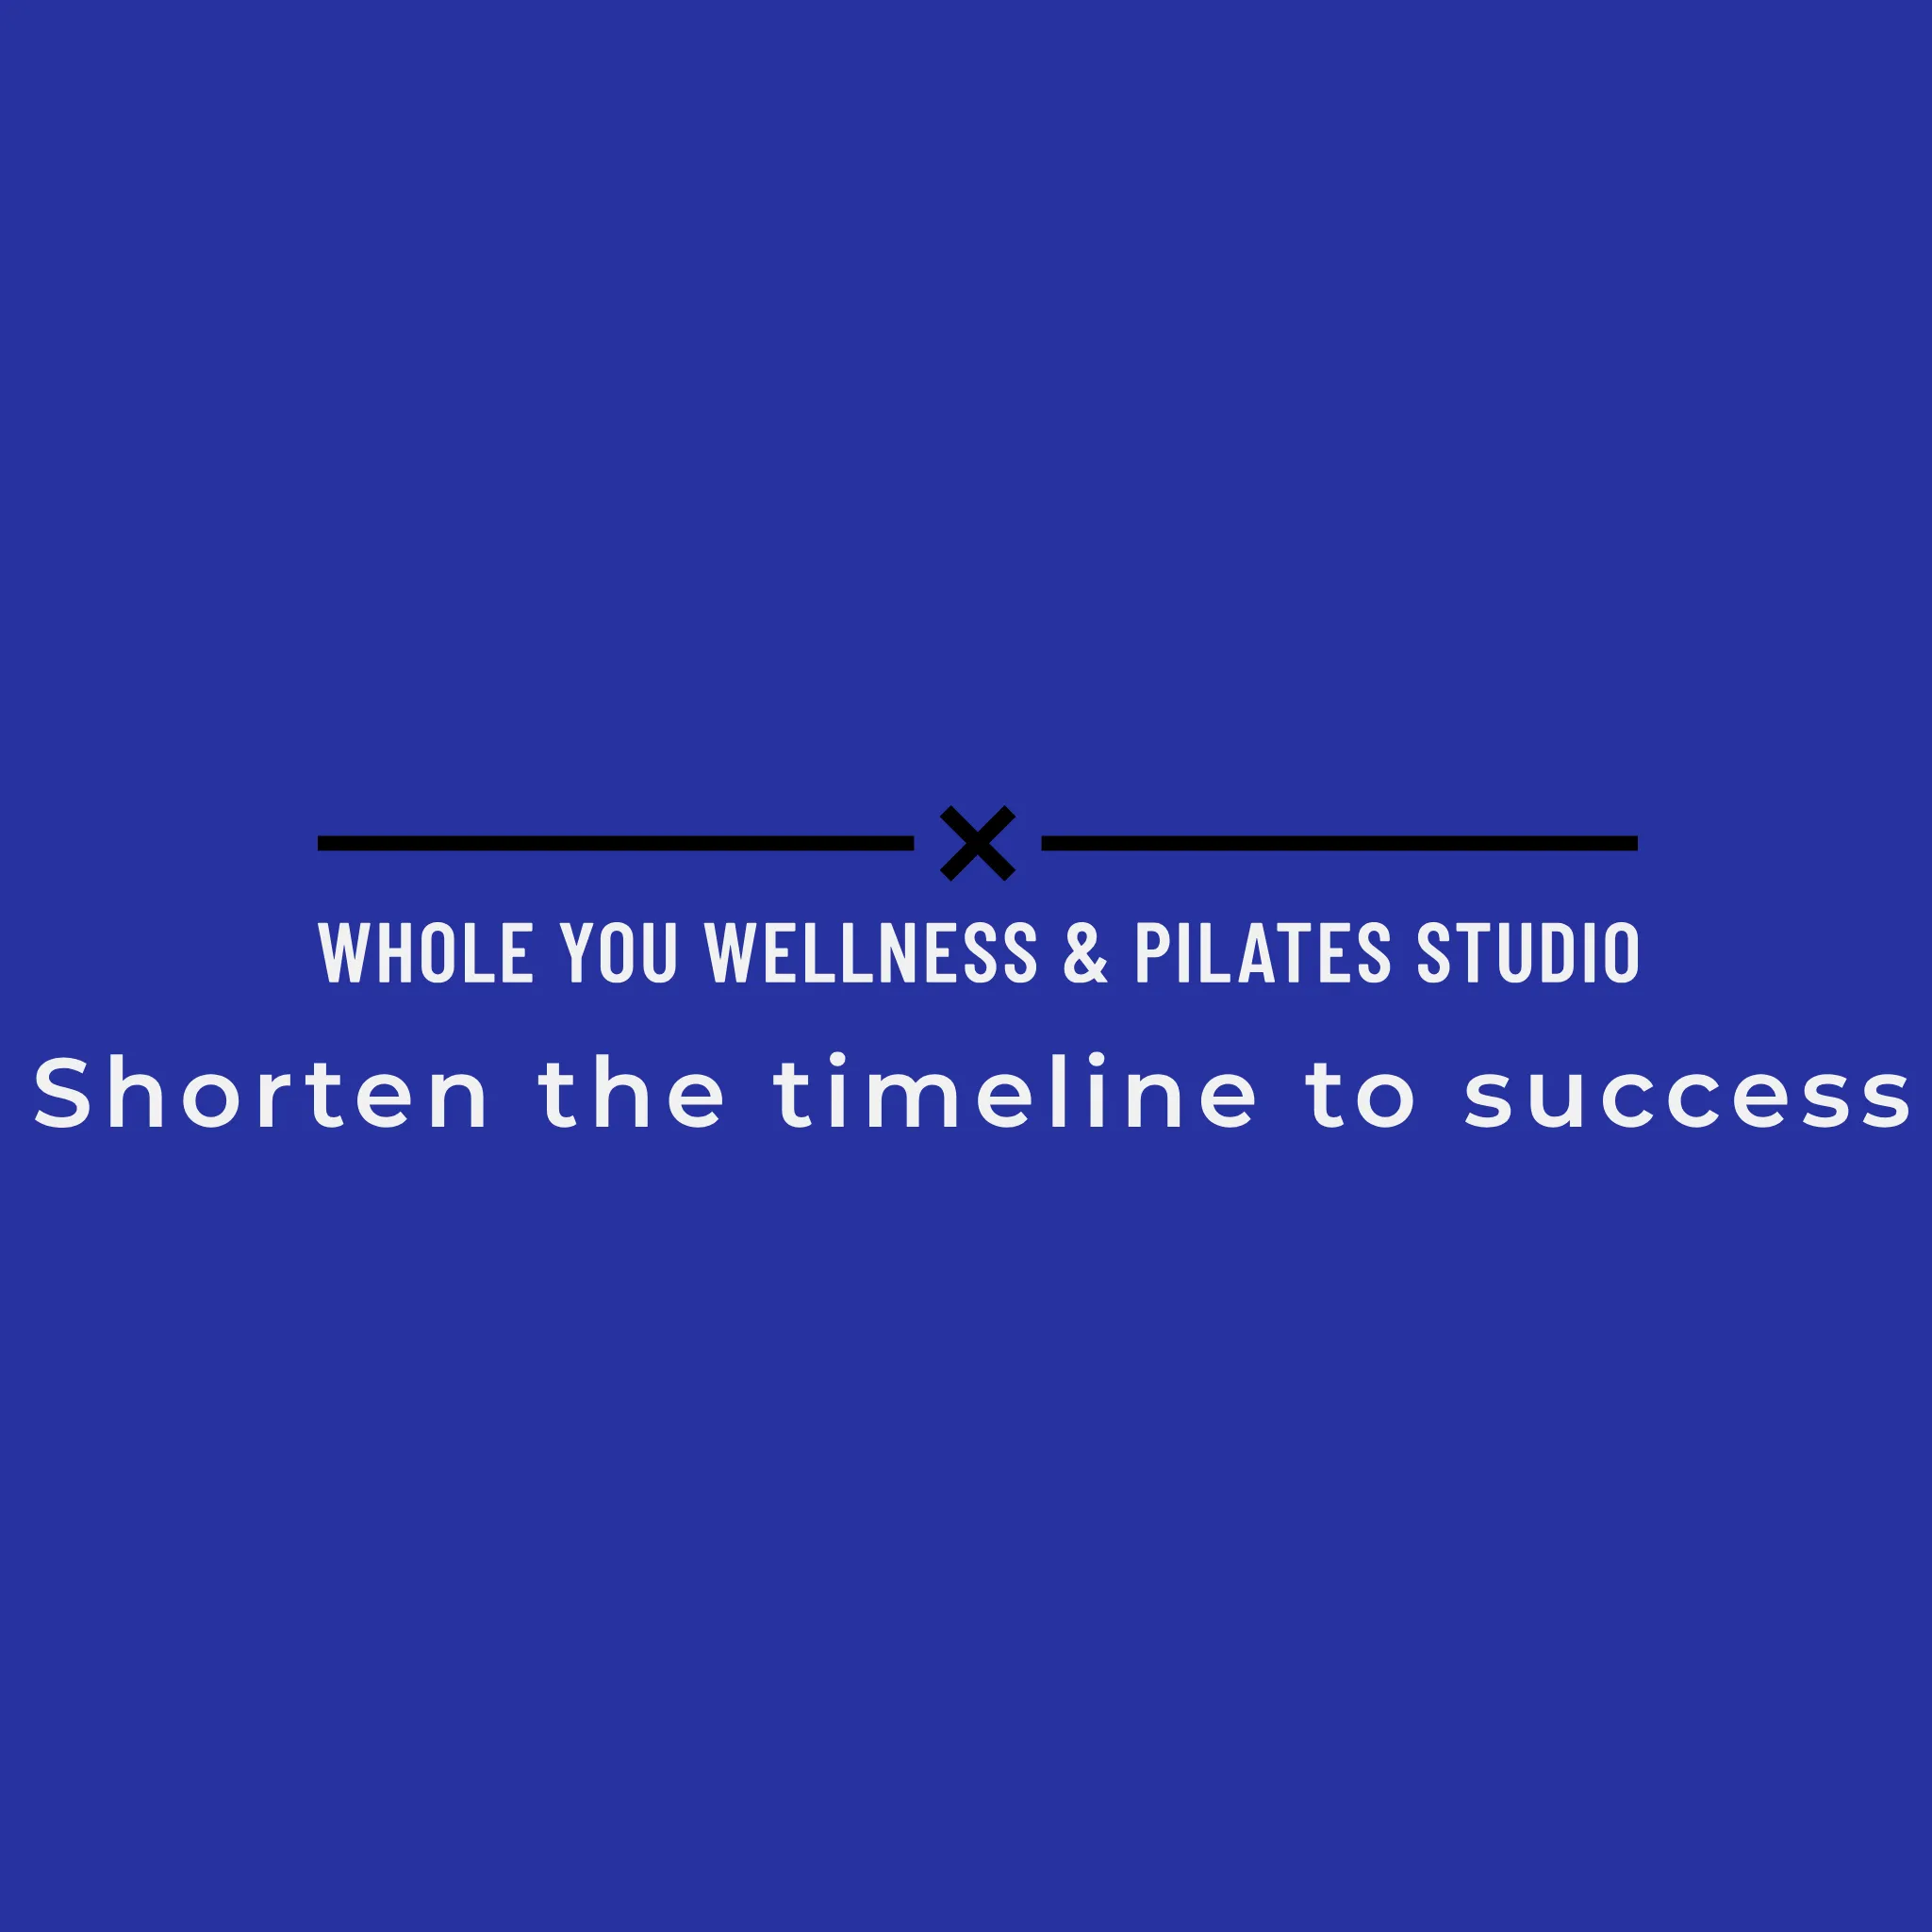 Whole You Wellness & Pilates Studio